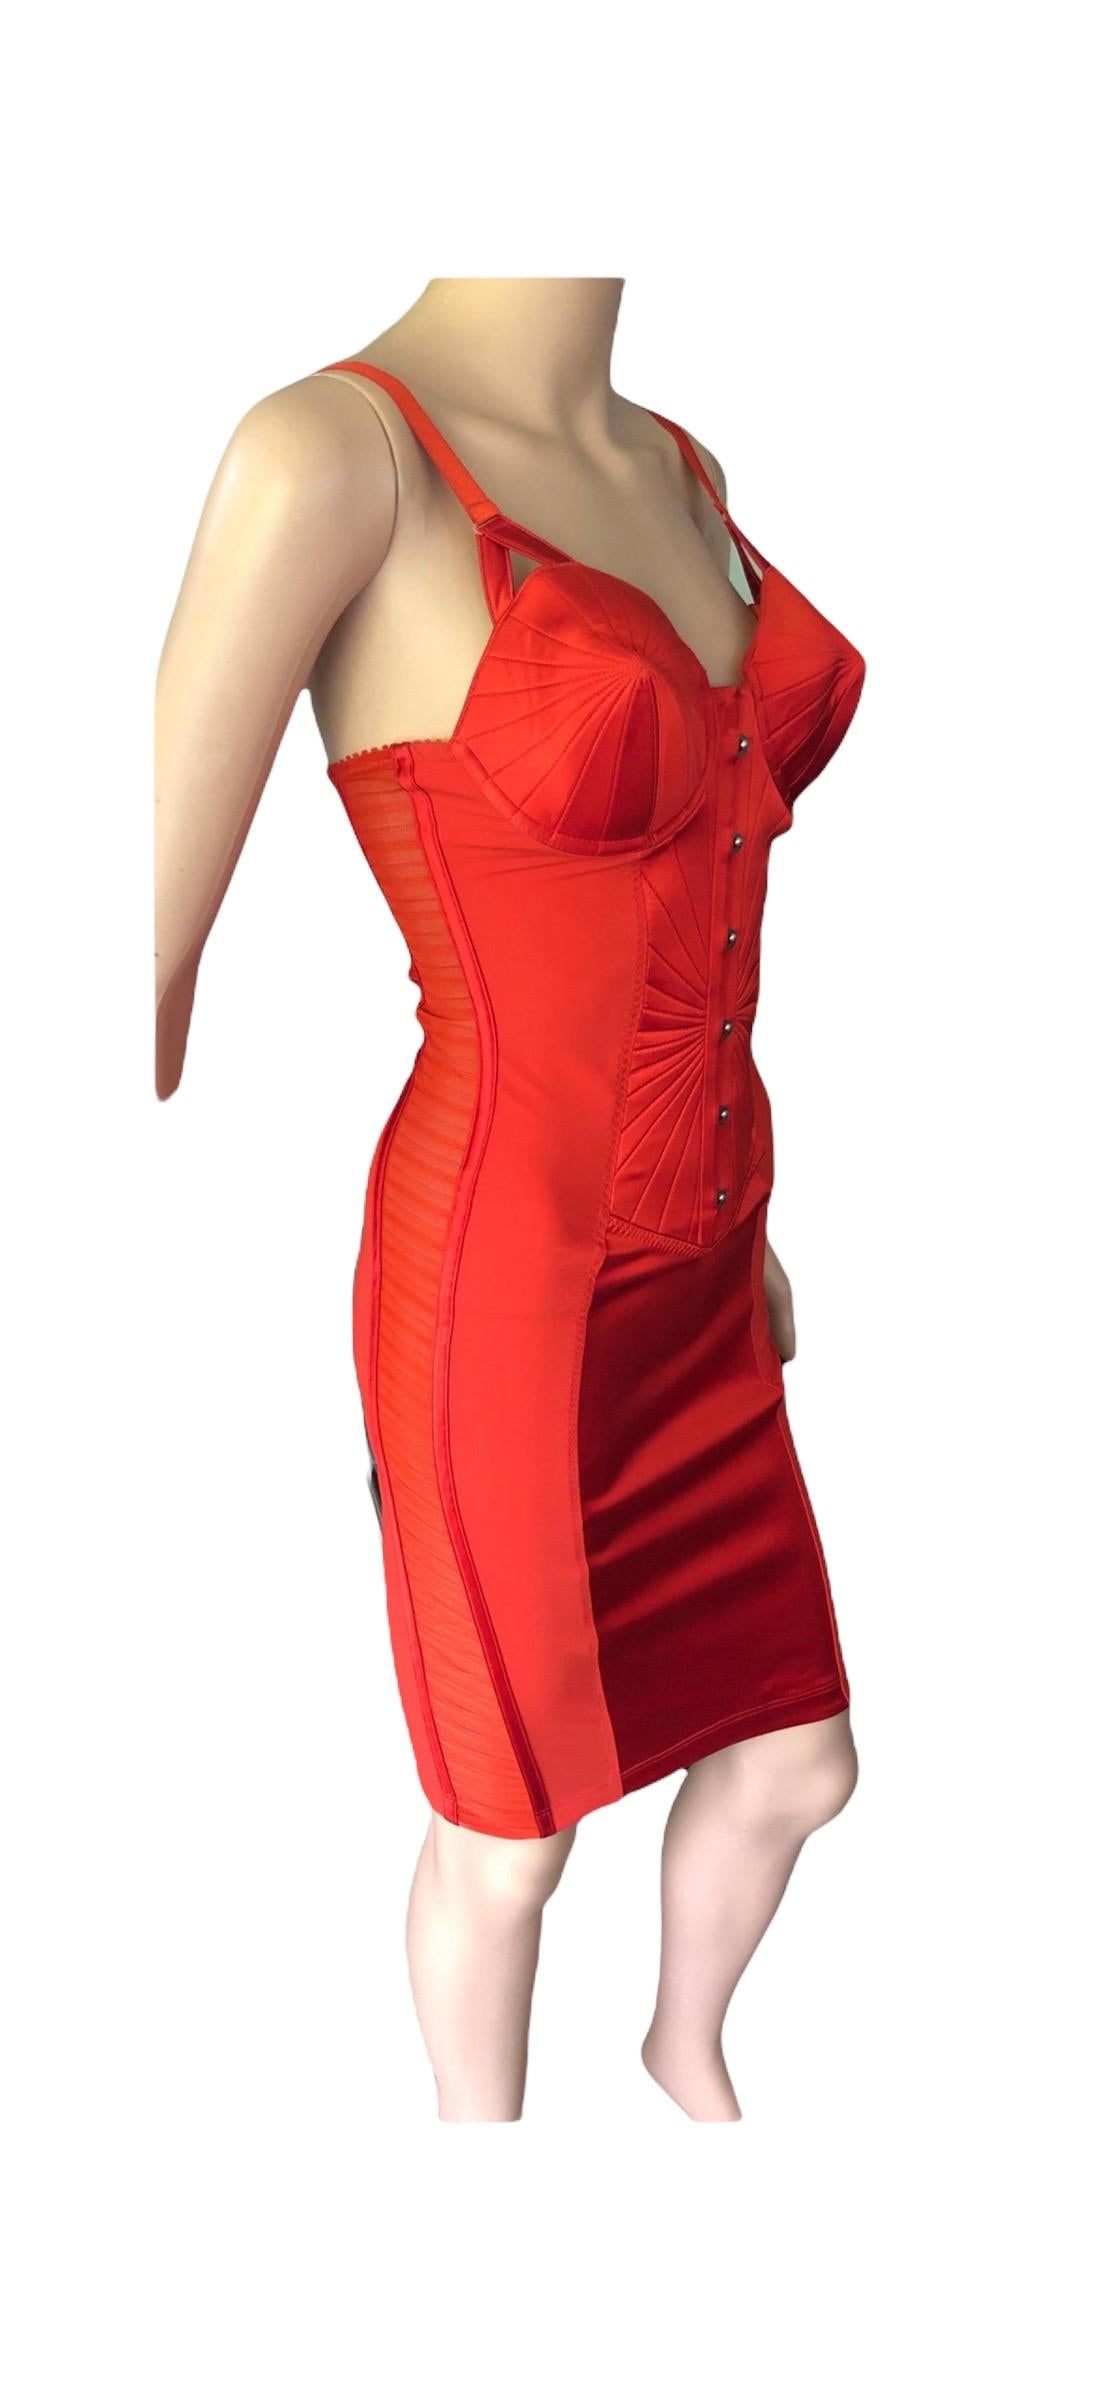 Jean Paul Gaultier for La Perla c. 2010 Cone Bra Corset Bondage Red Dress For Sale 10